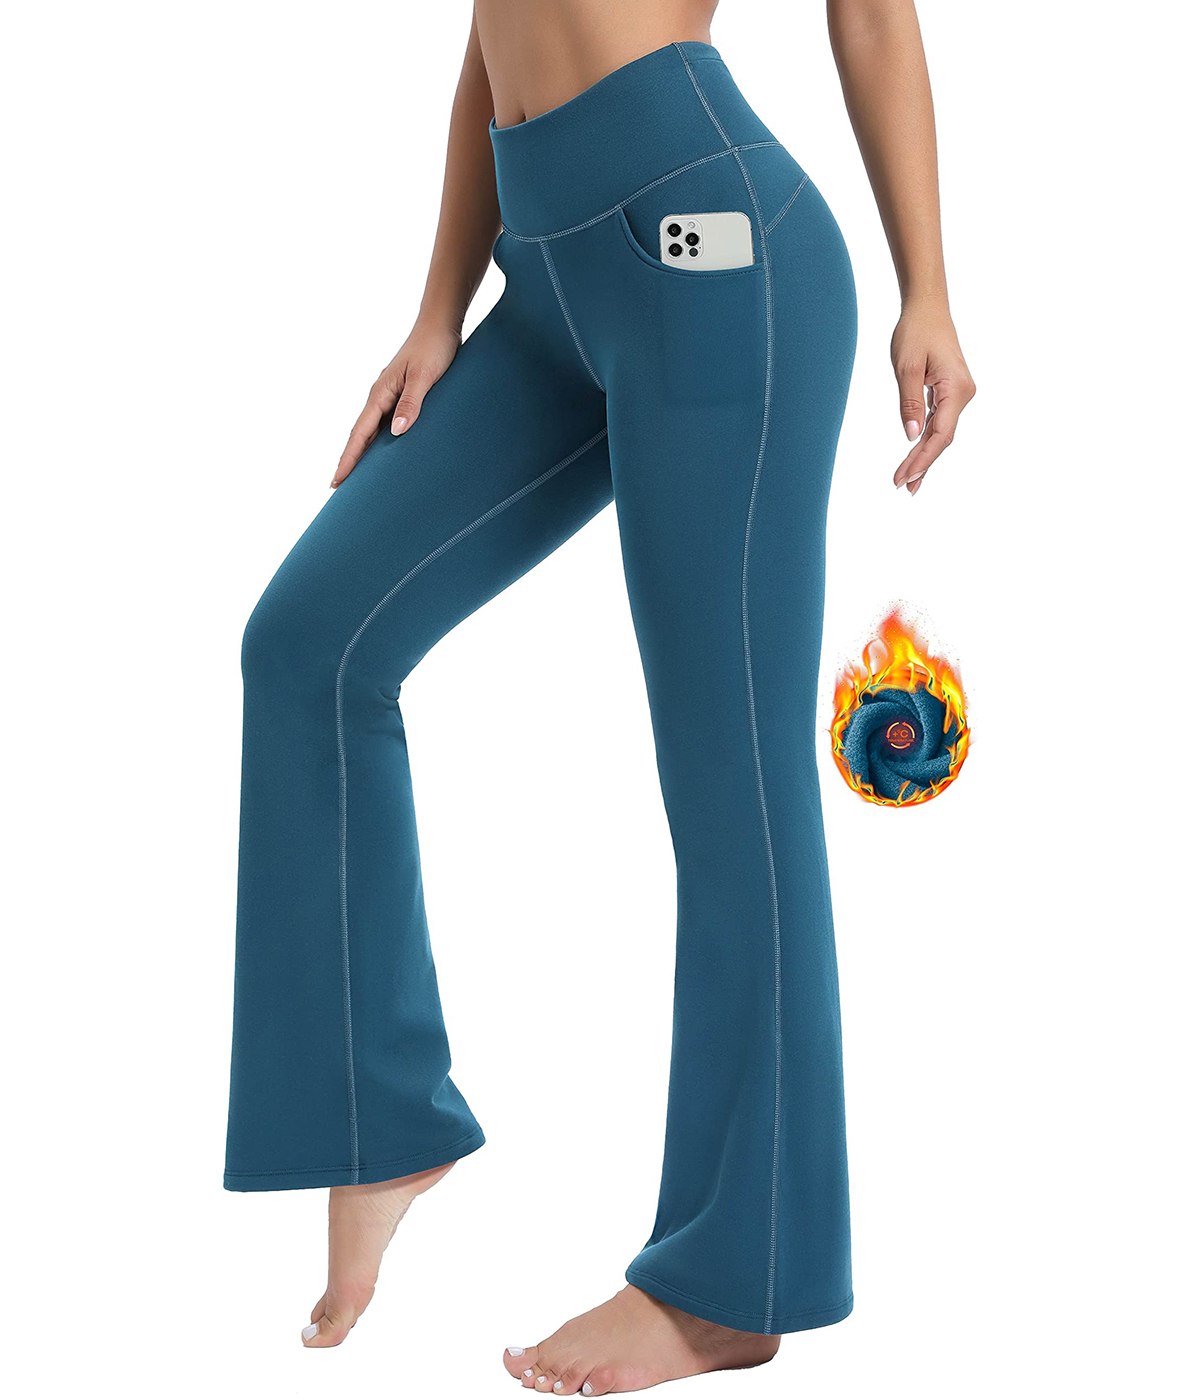 IUGA Fleece Lined Bootcut Yoga Pants with Pockets